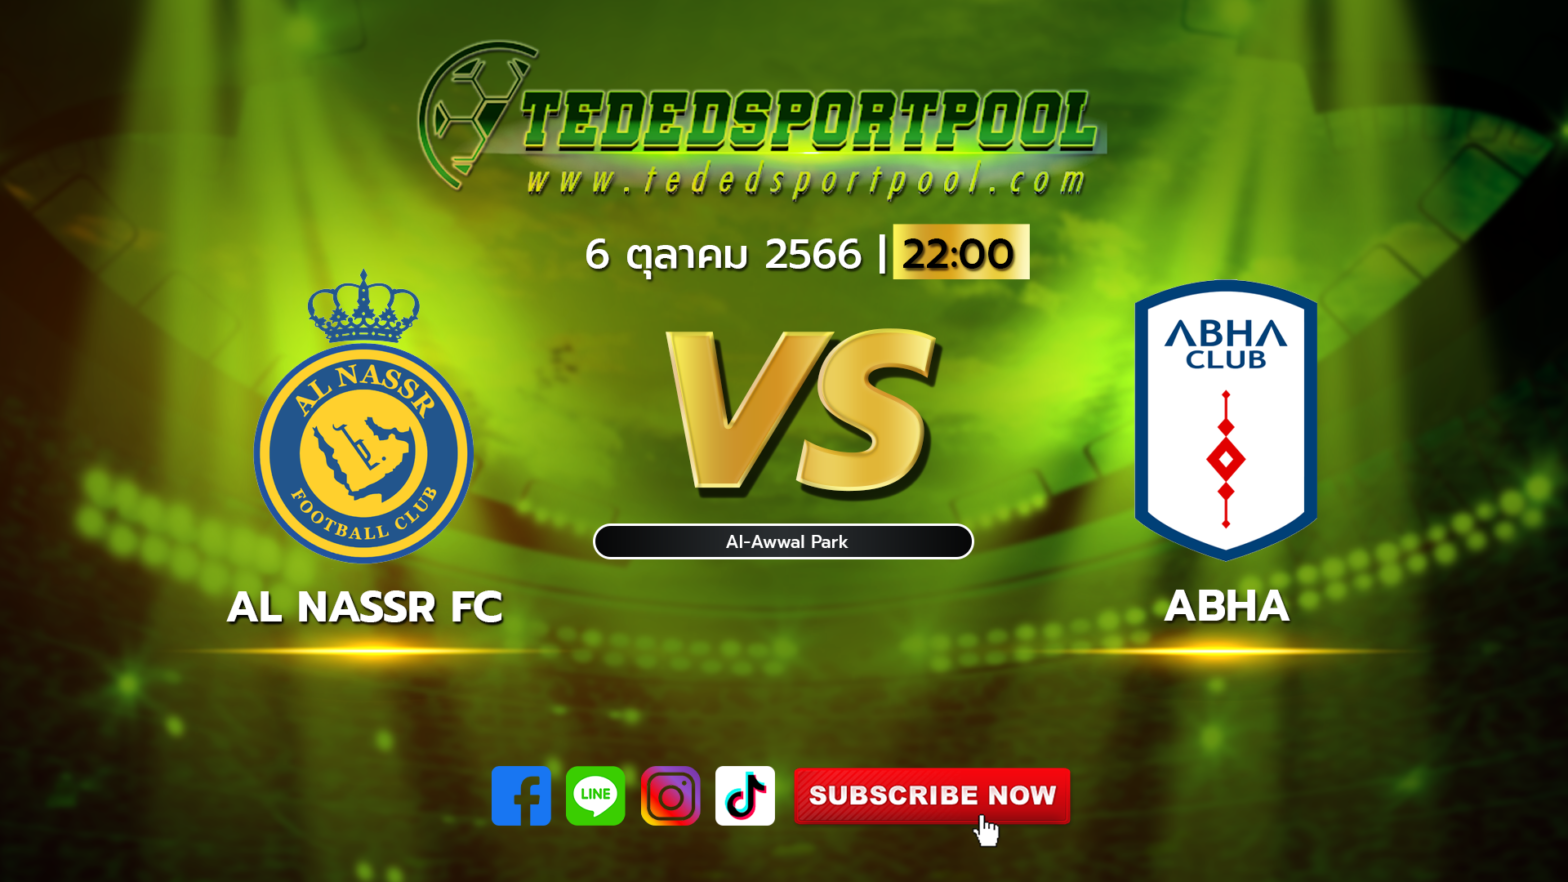 Al Nassr FC vs Abha